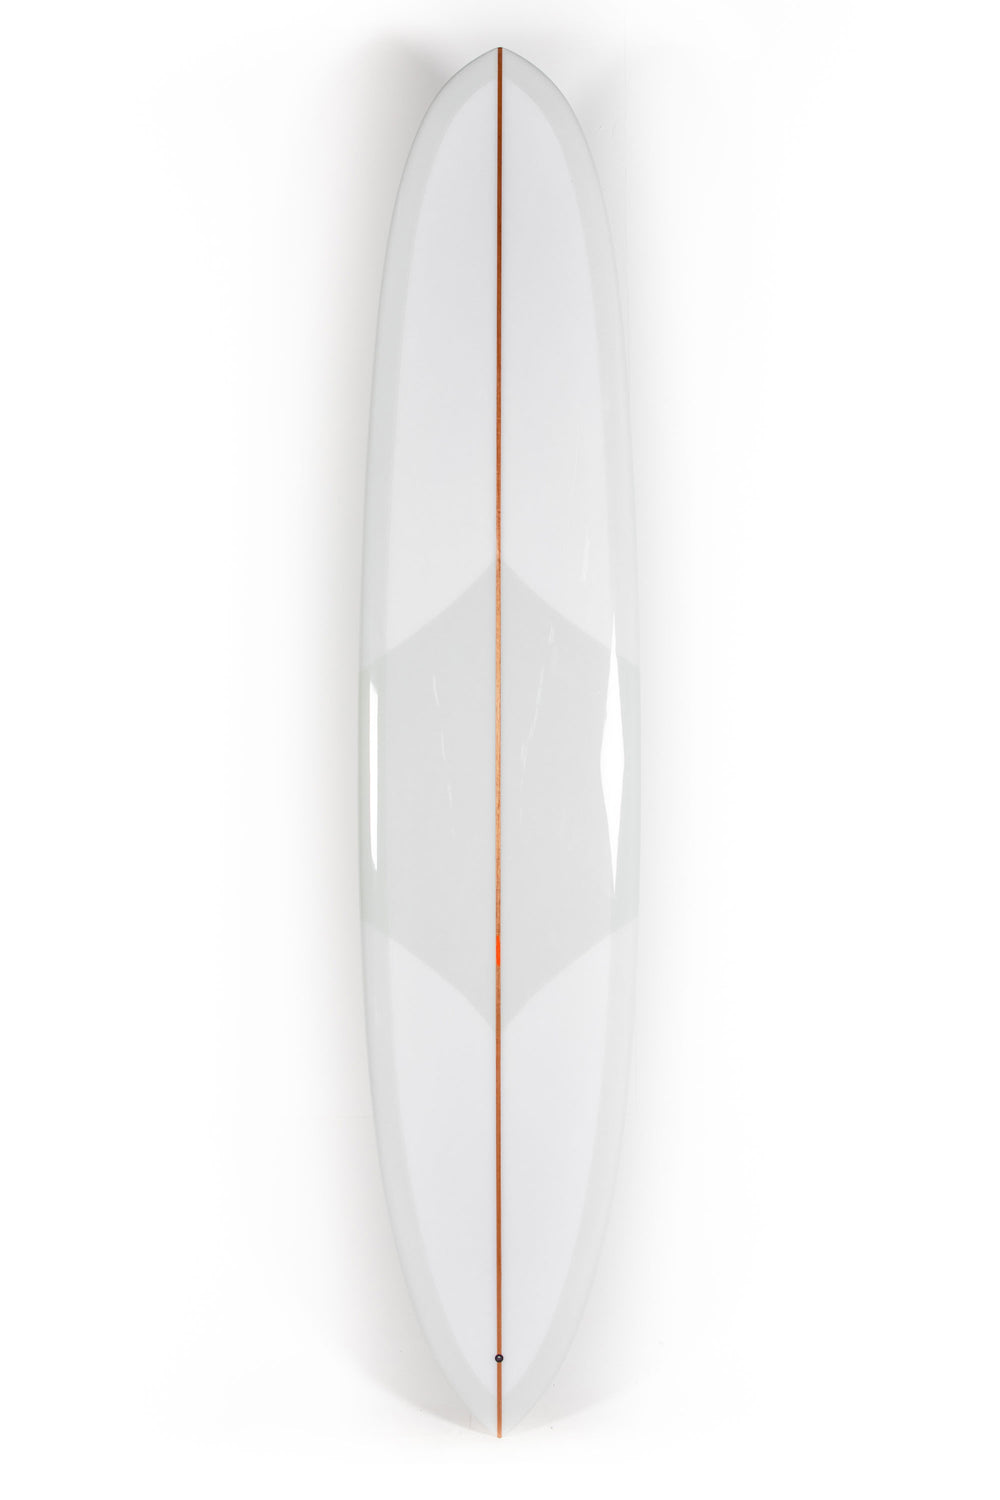 Pukas Surf Shop - Custom Christenson Surfboard  - THE CLIFF PINTAIL by Chris Christenson - 9'0” x 22 7/8 x 2 13/16